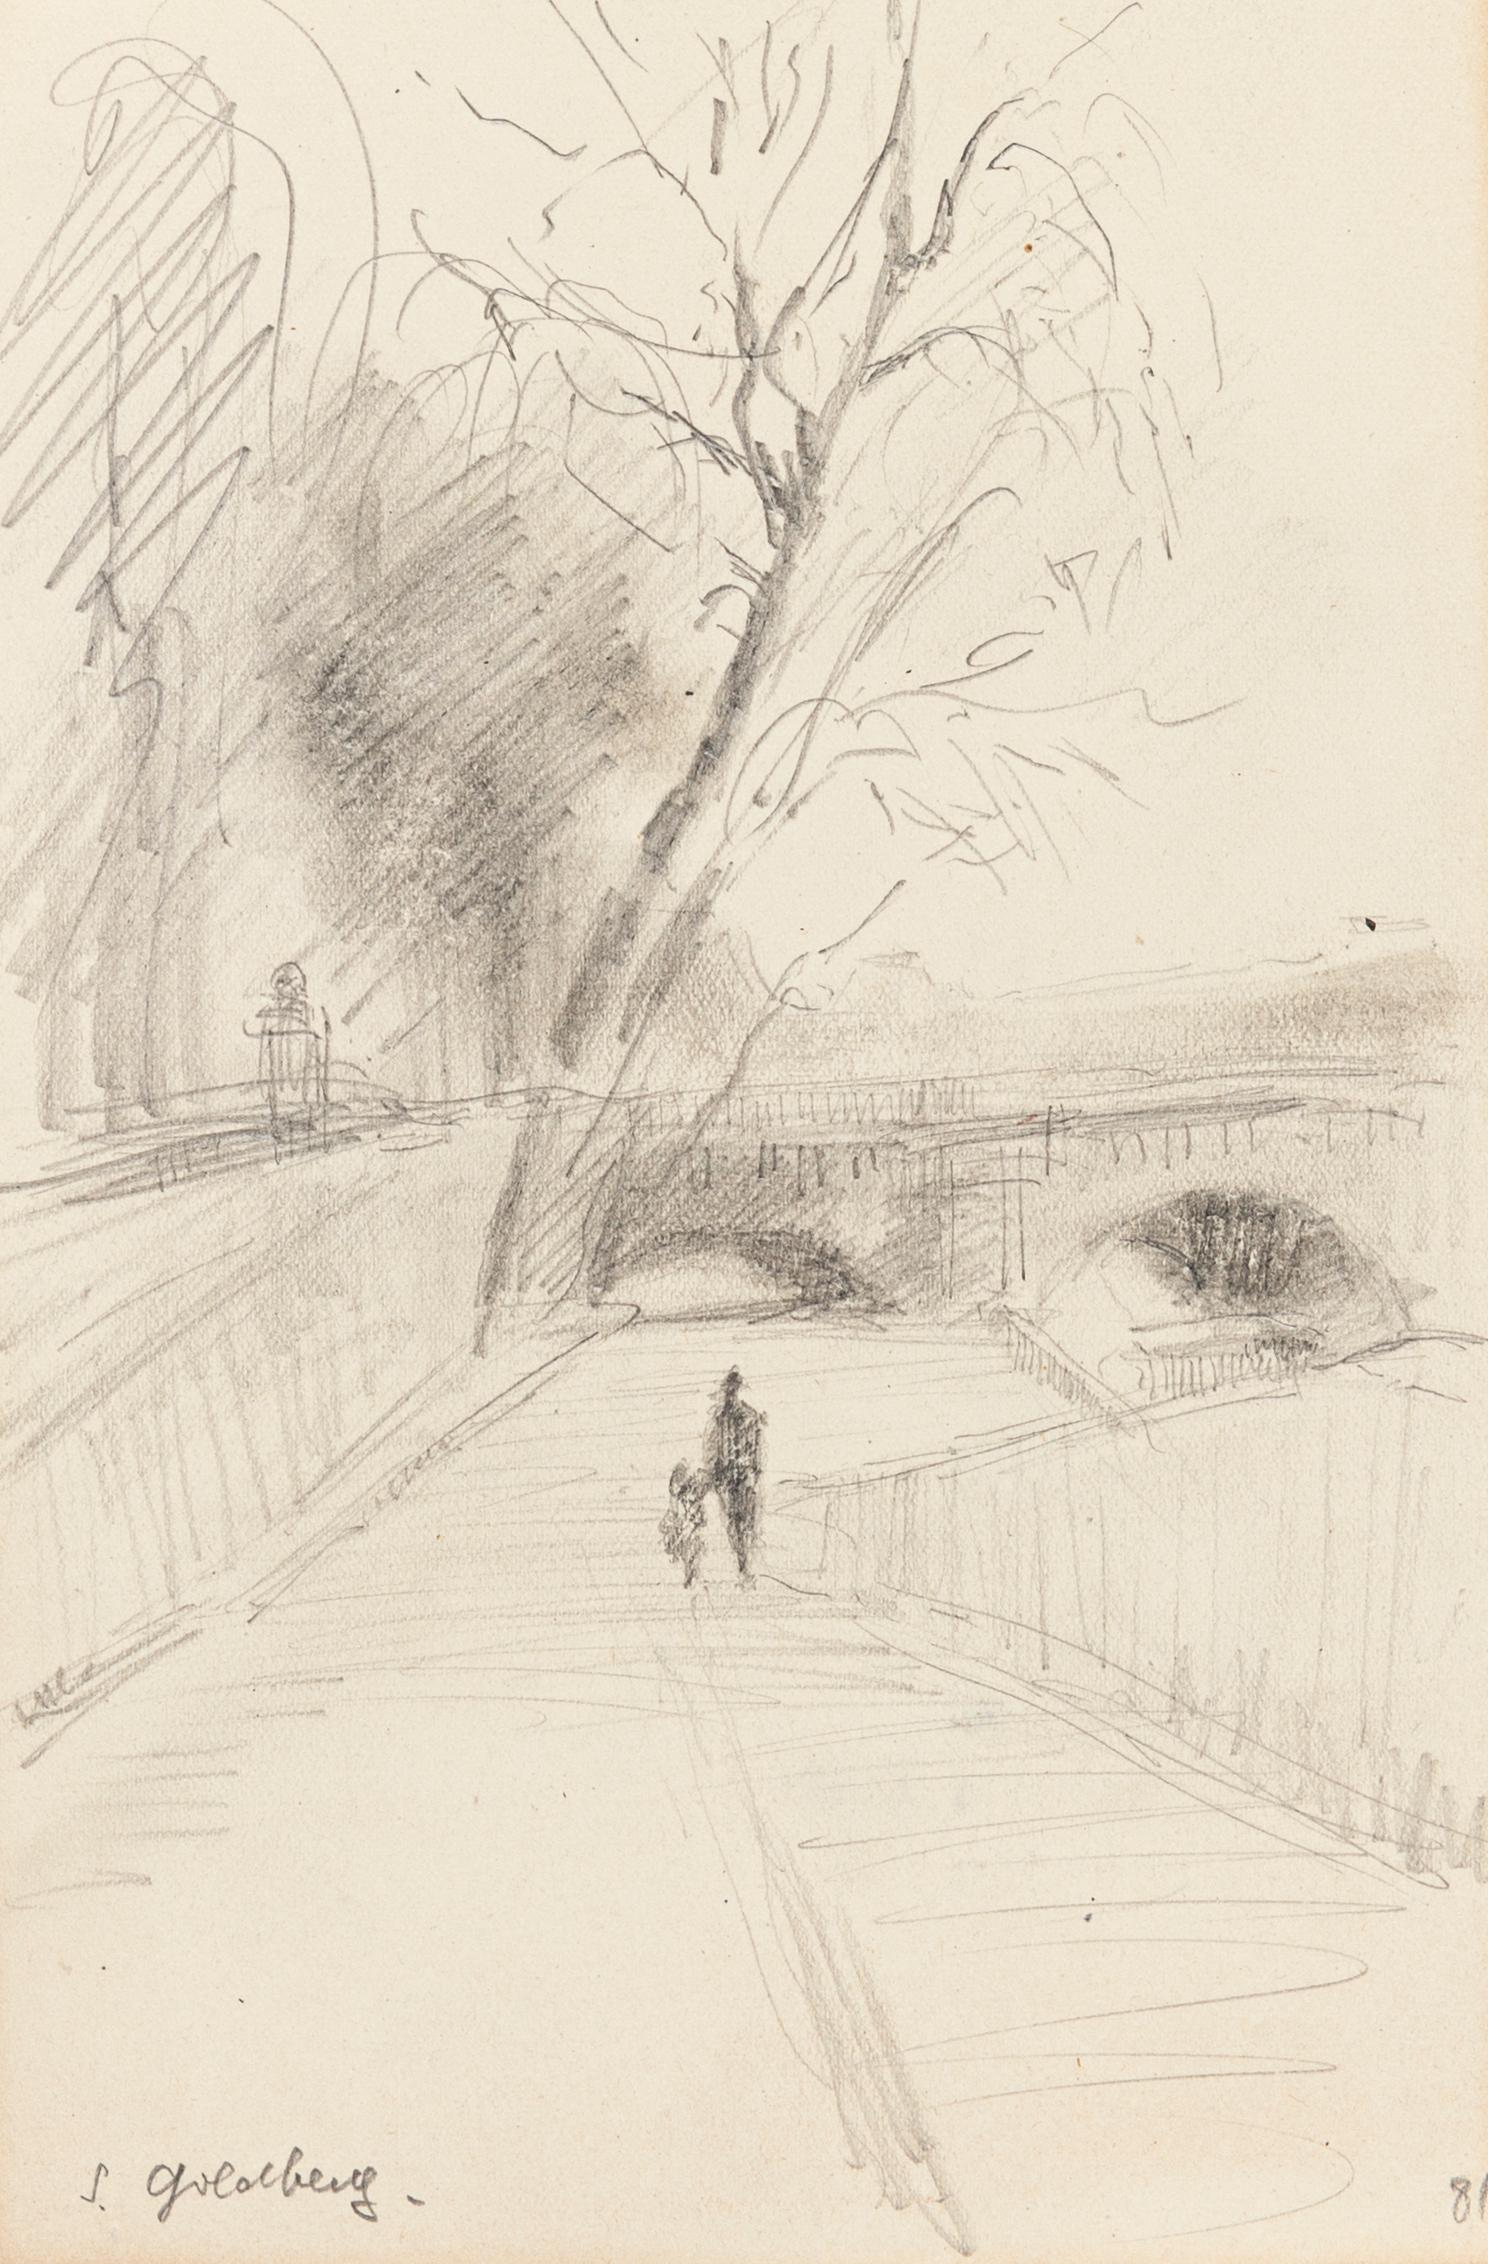 Simon Goldberg Portrait - Bridge - Original Pencil Drawing by S. Goldberg - Mid 20th Century